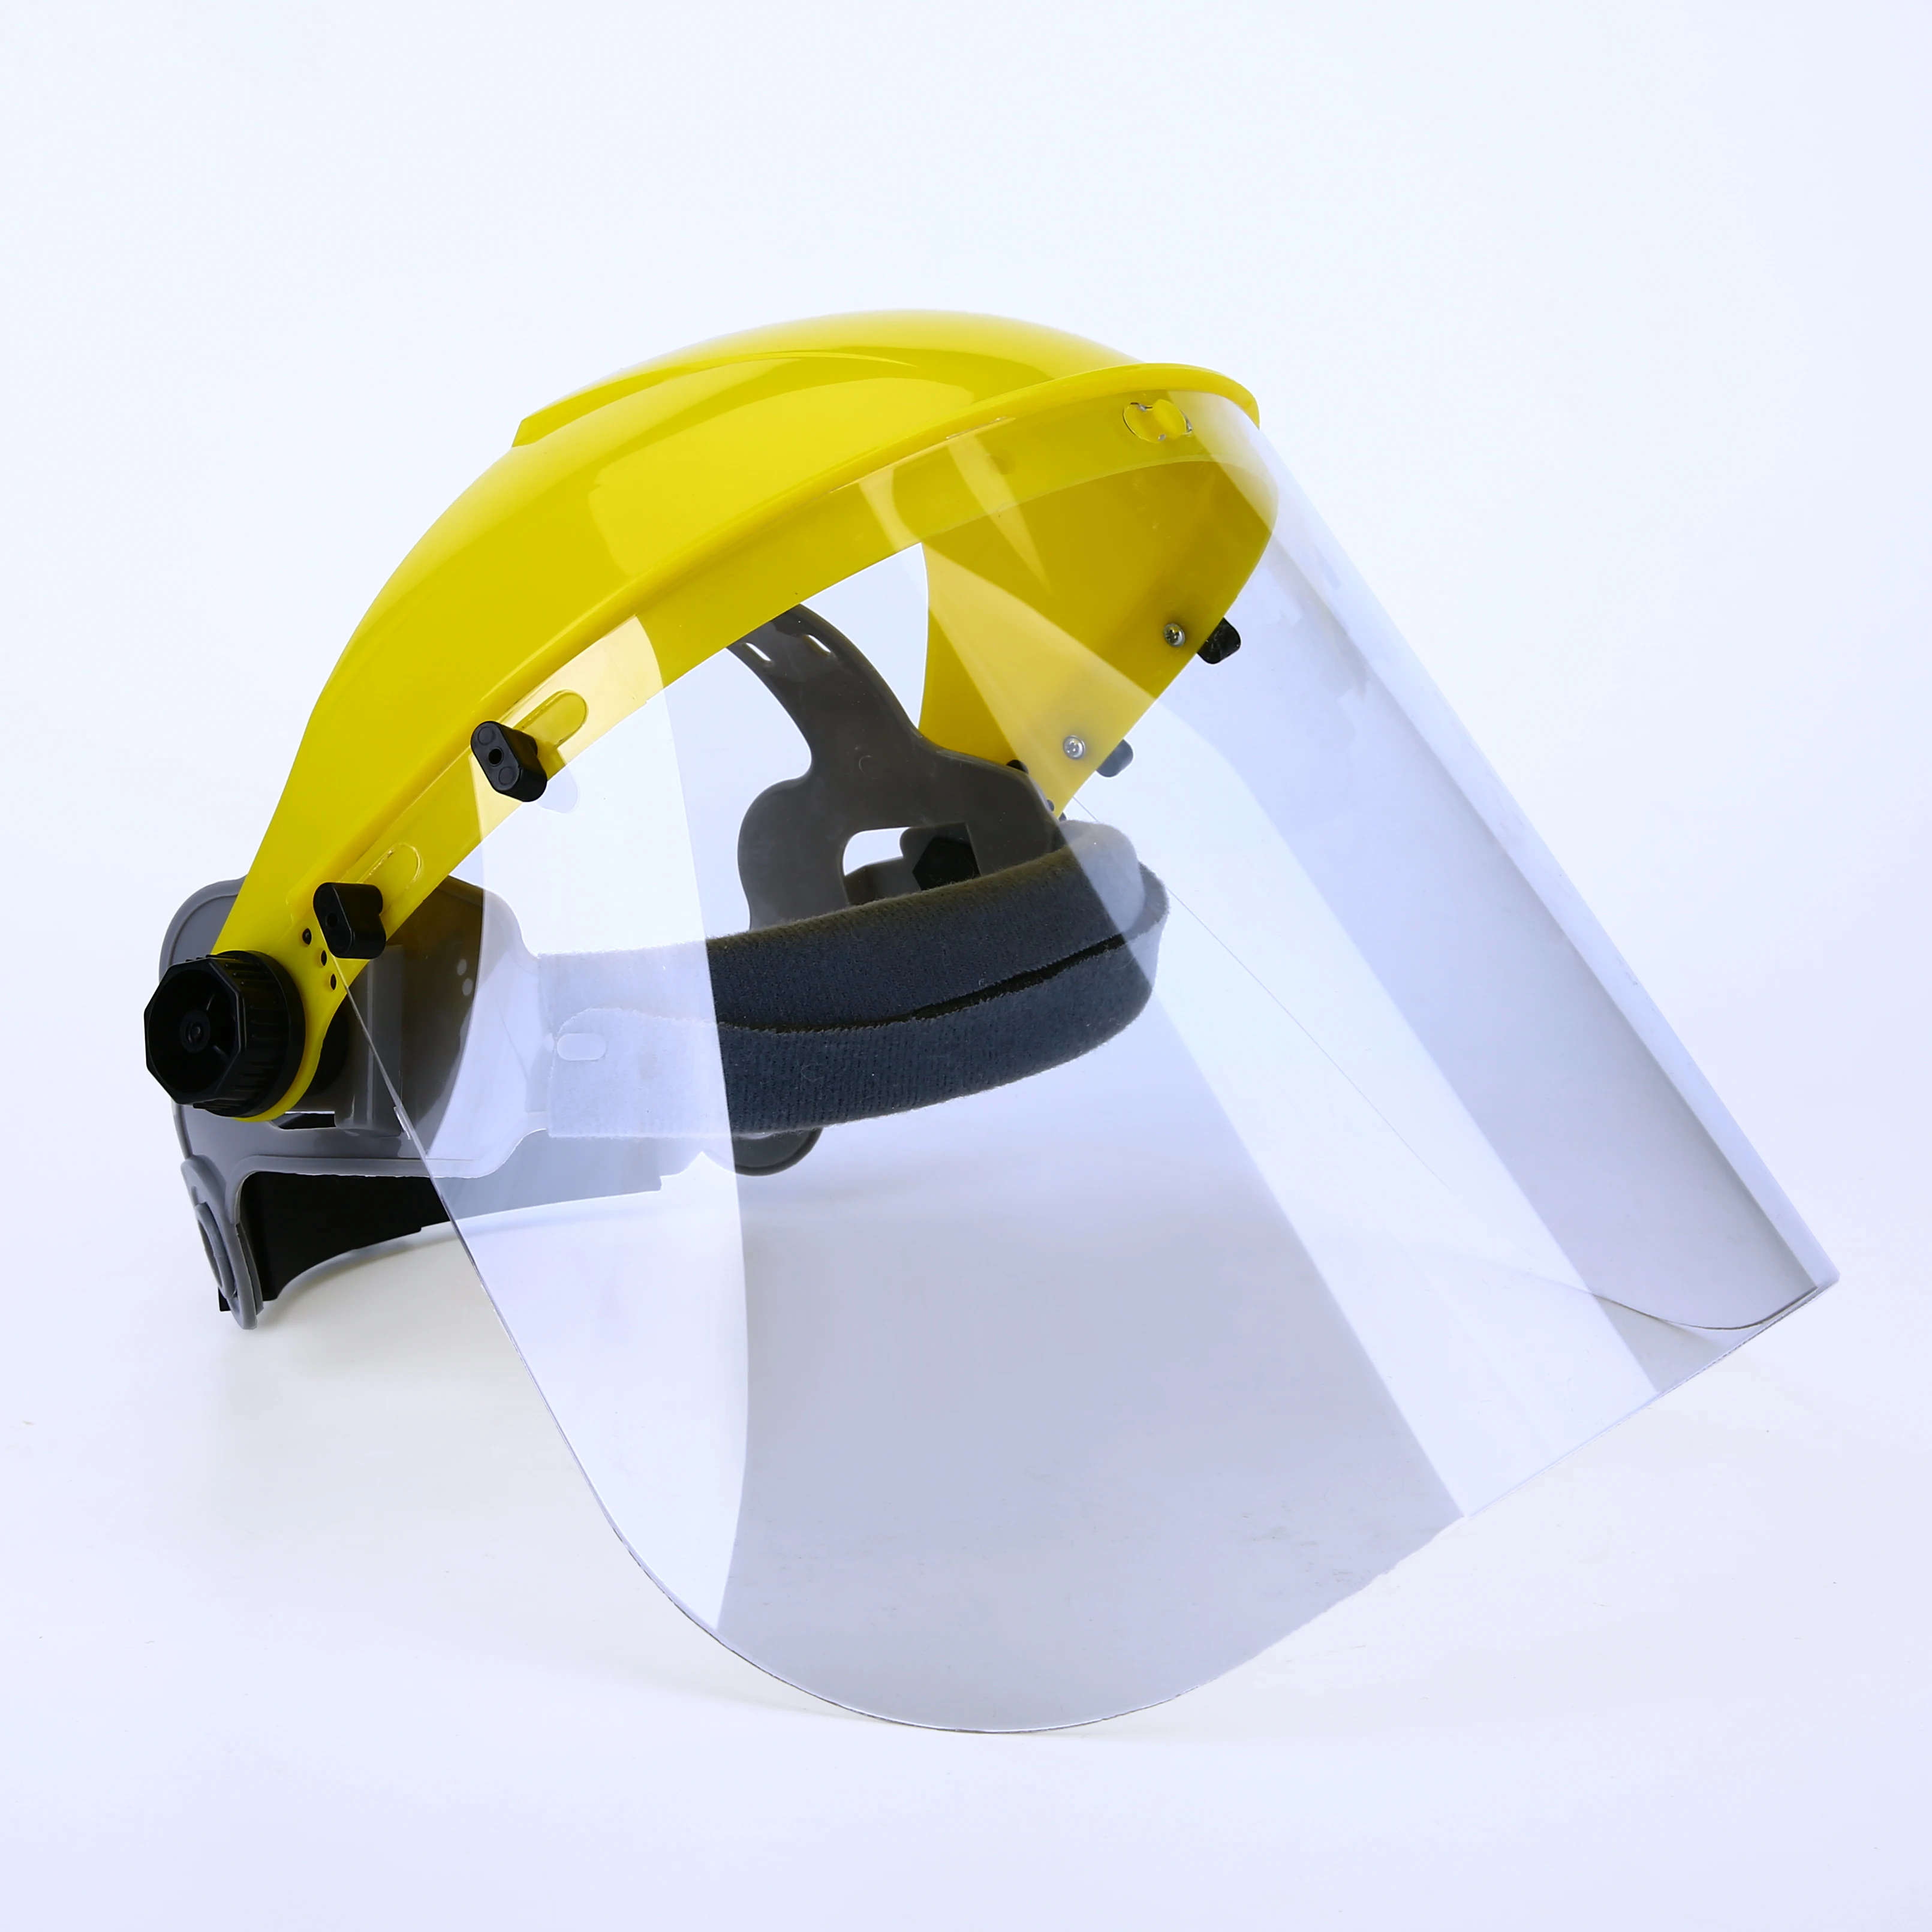 Impact resistant visor transparent protective safety face shield full face protective shield EN 166